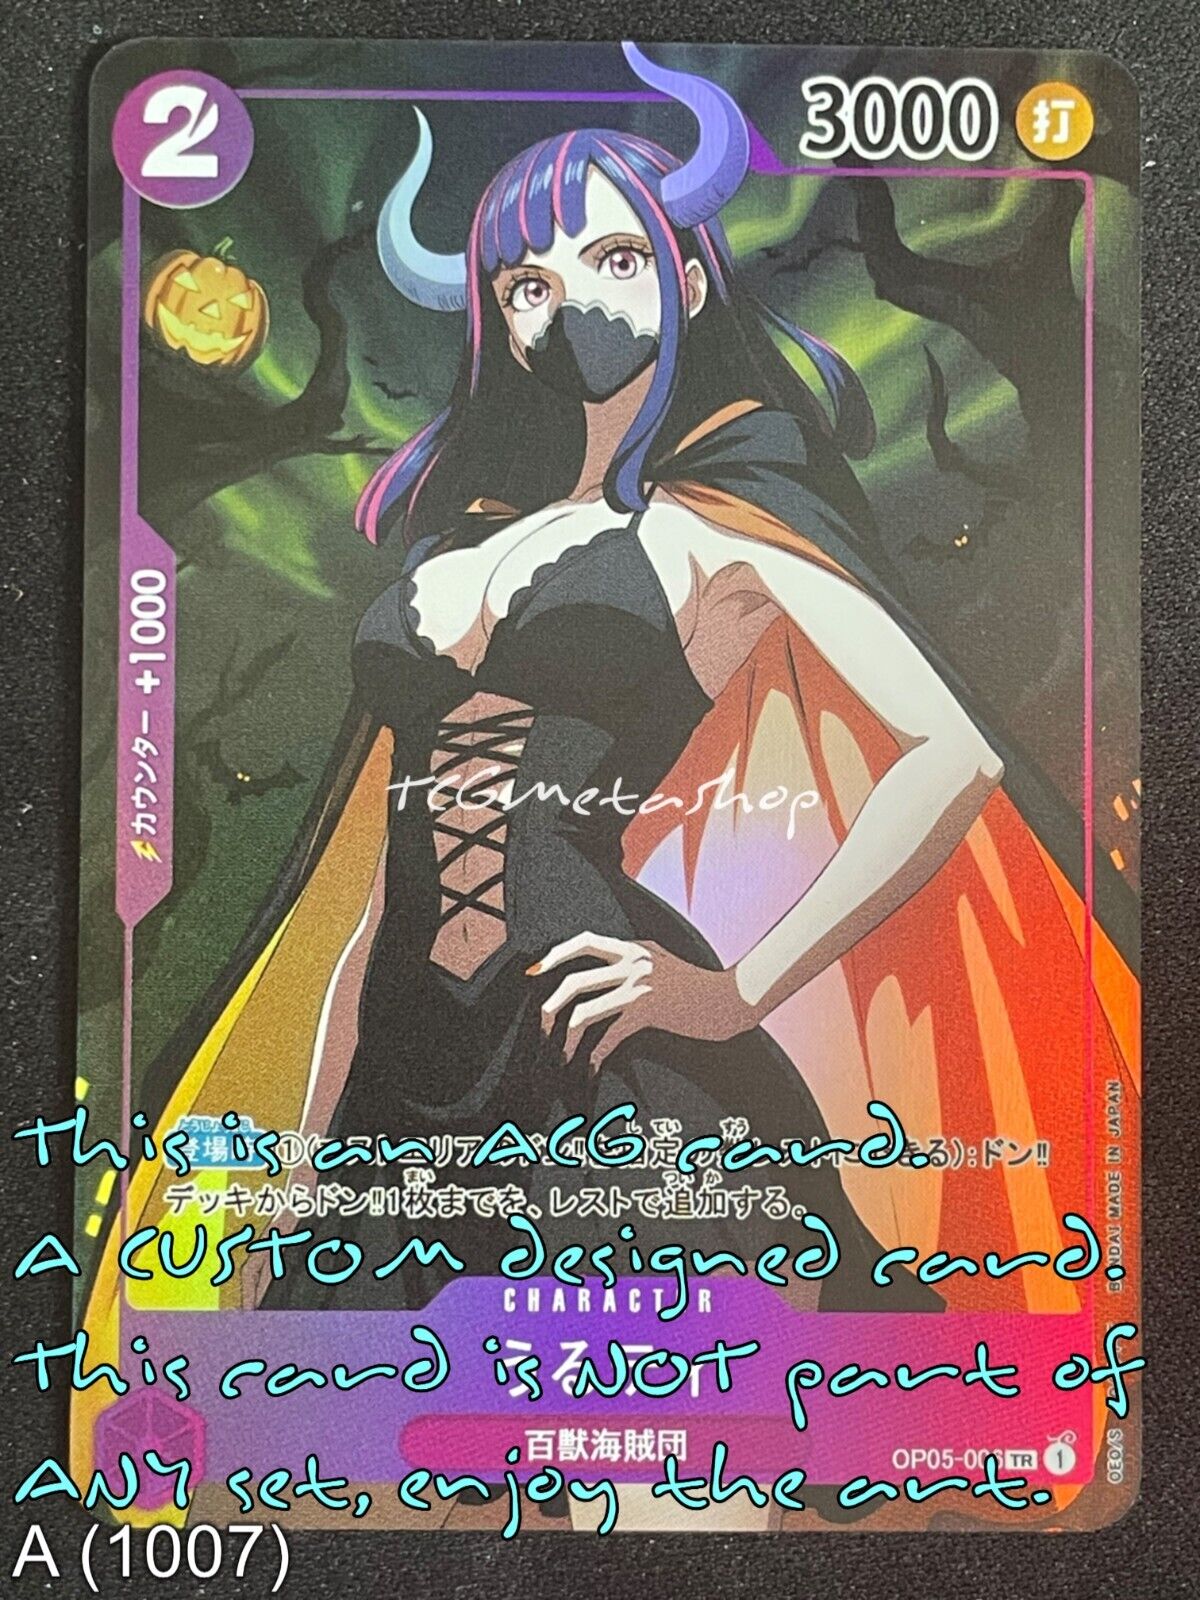 🔥 A 1007 Ulti One Piece Goddess Story Anime Waifu Card ACG 🔥